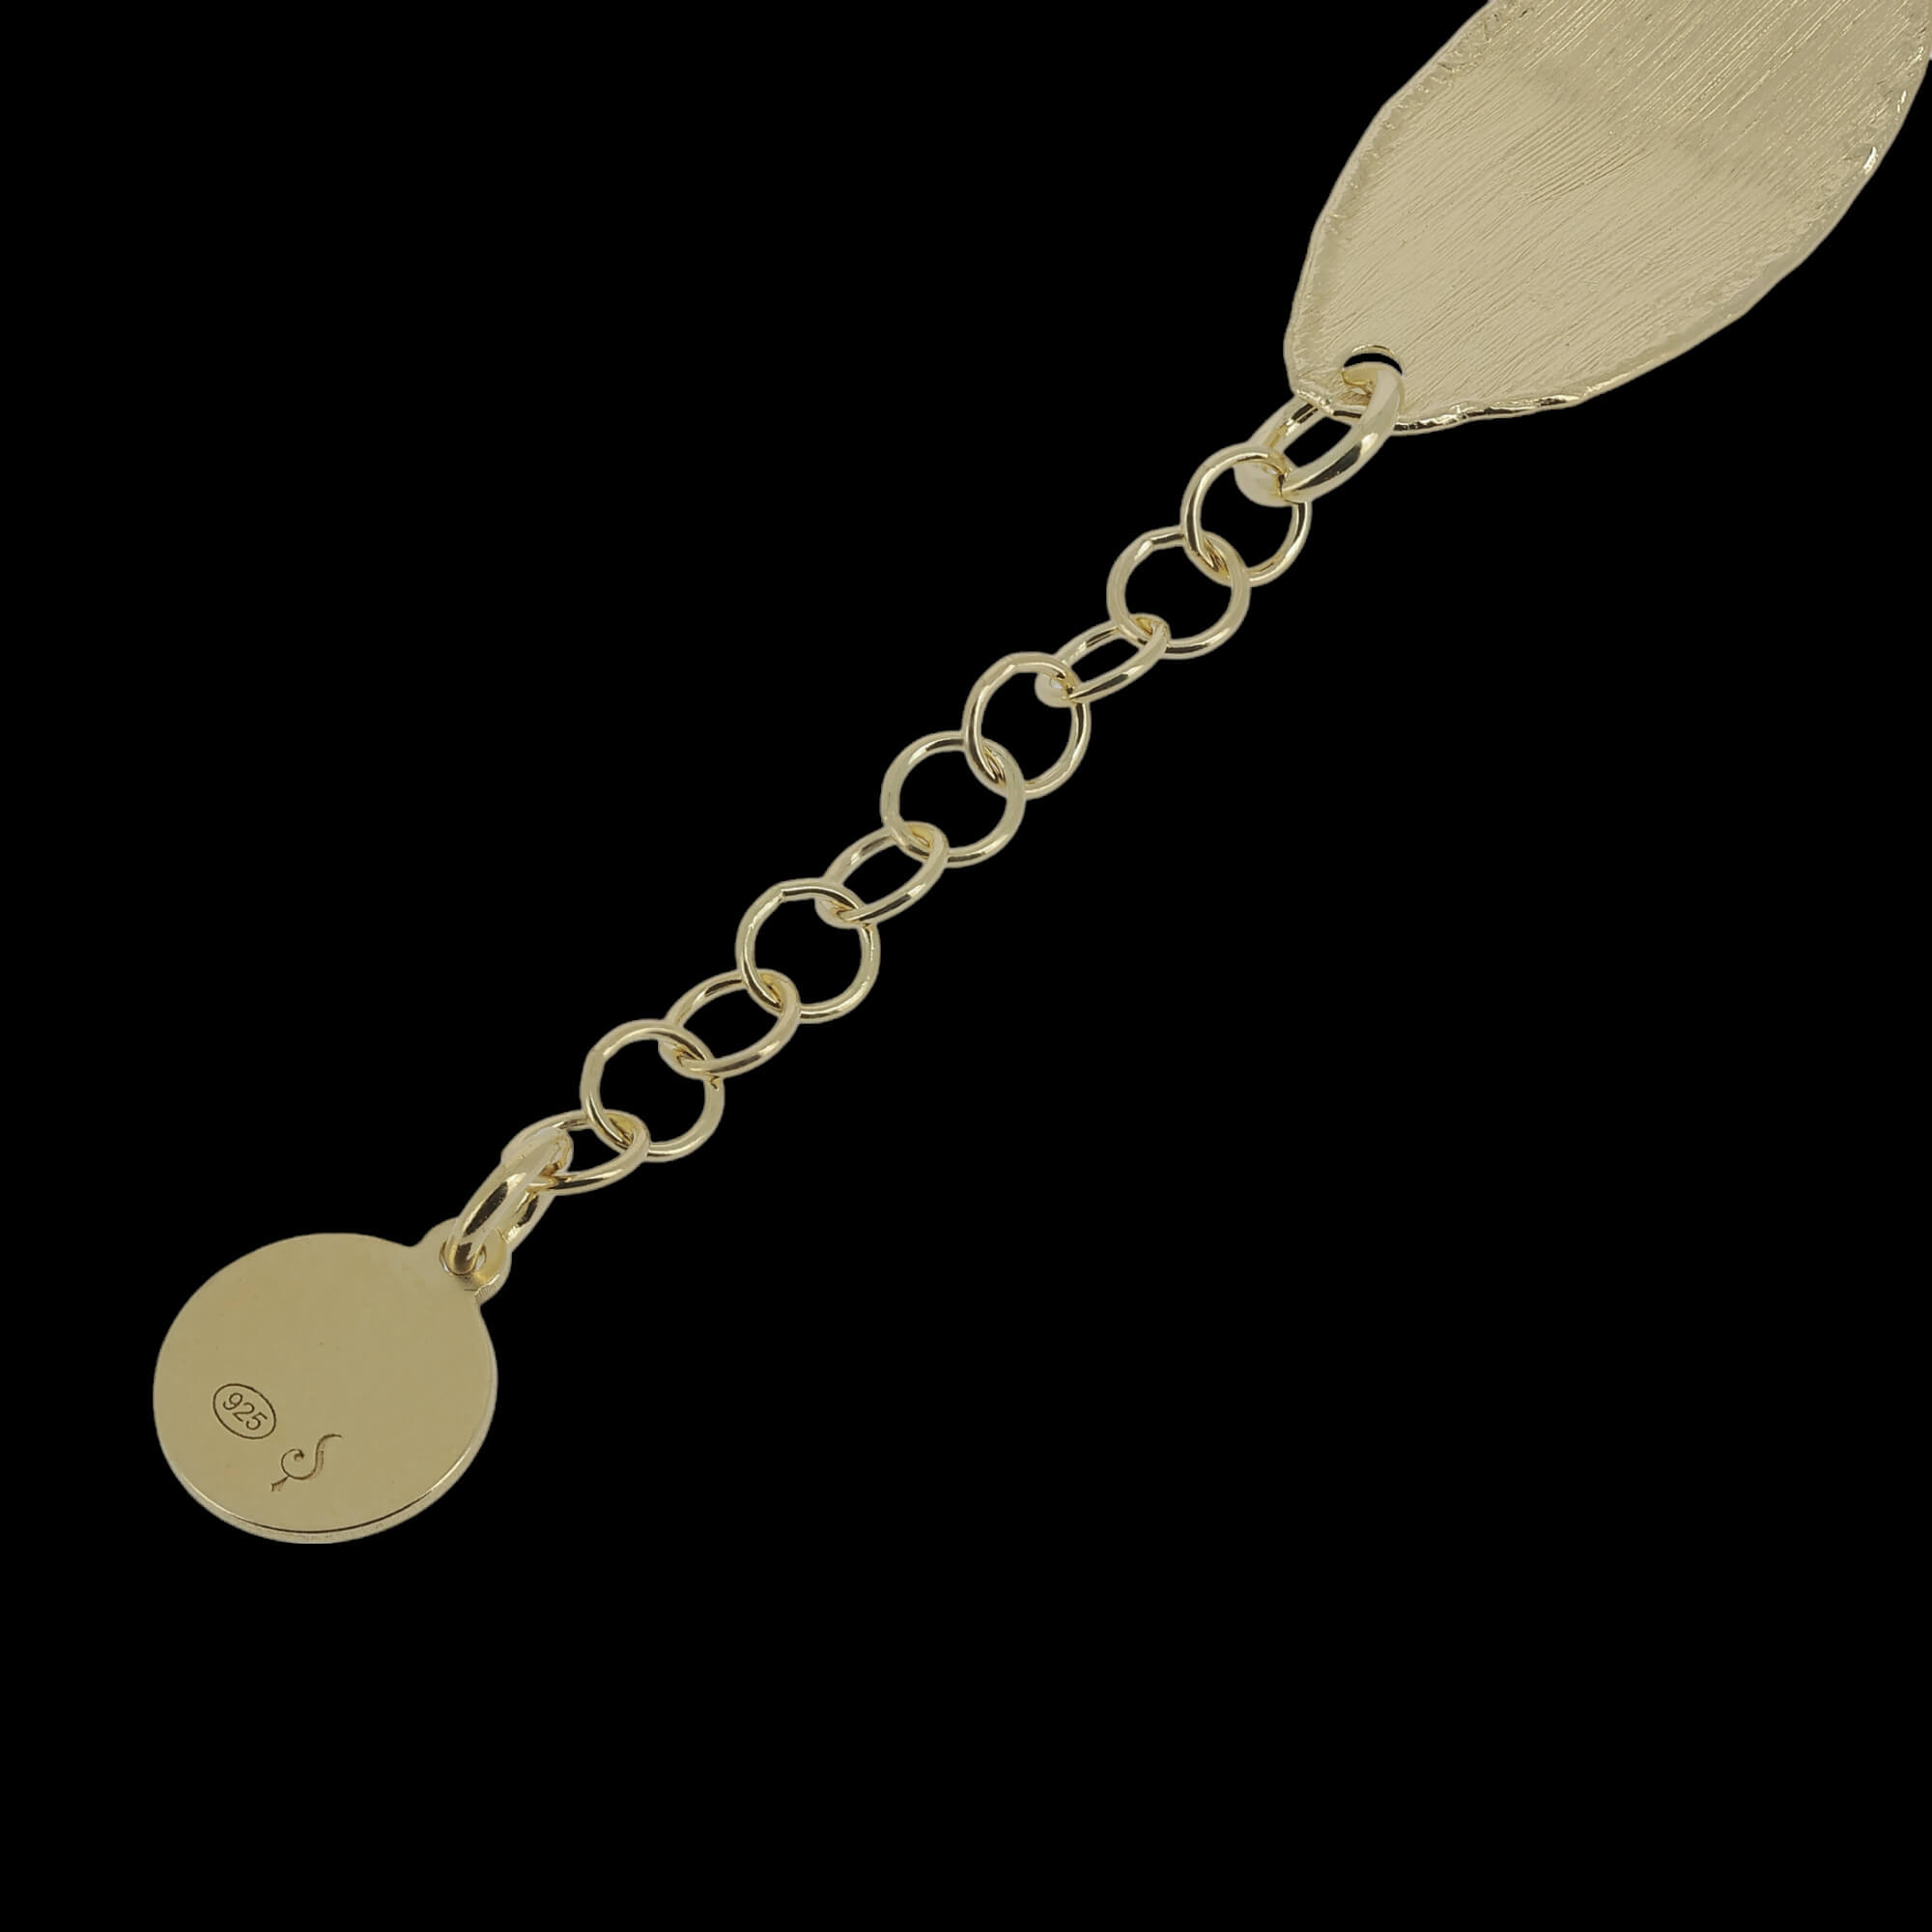 Gilt and oval-shaped bracelet